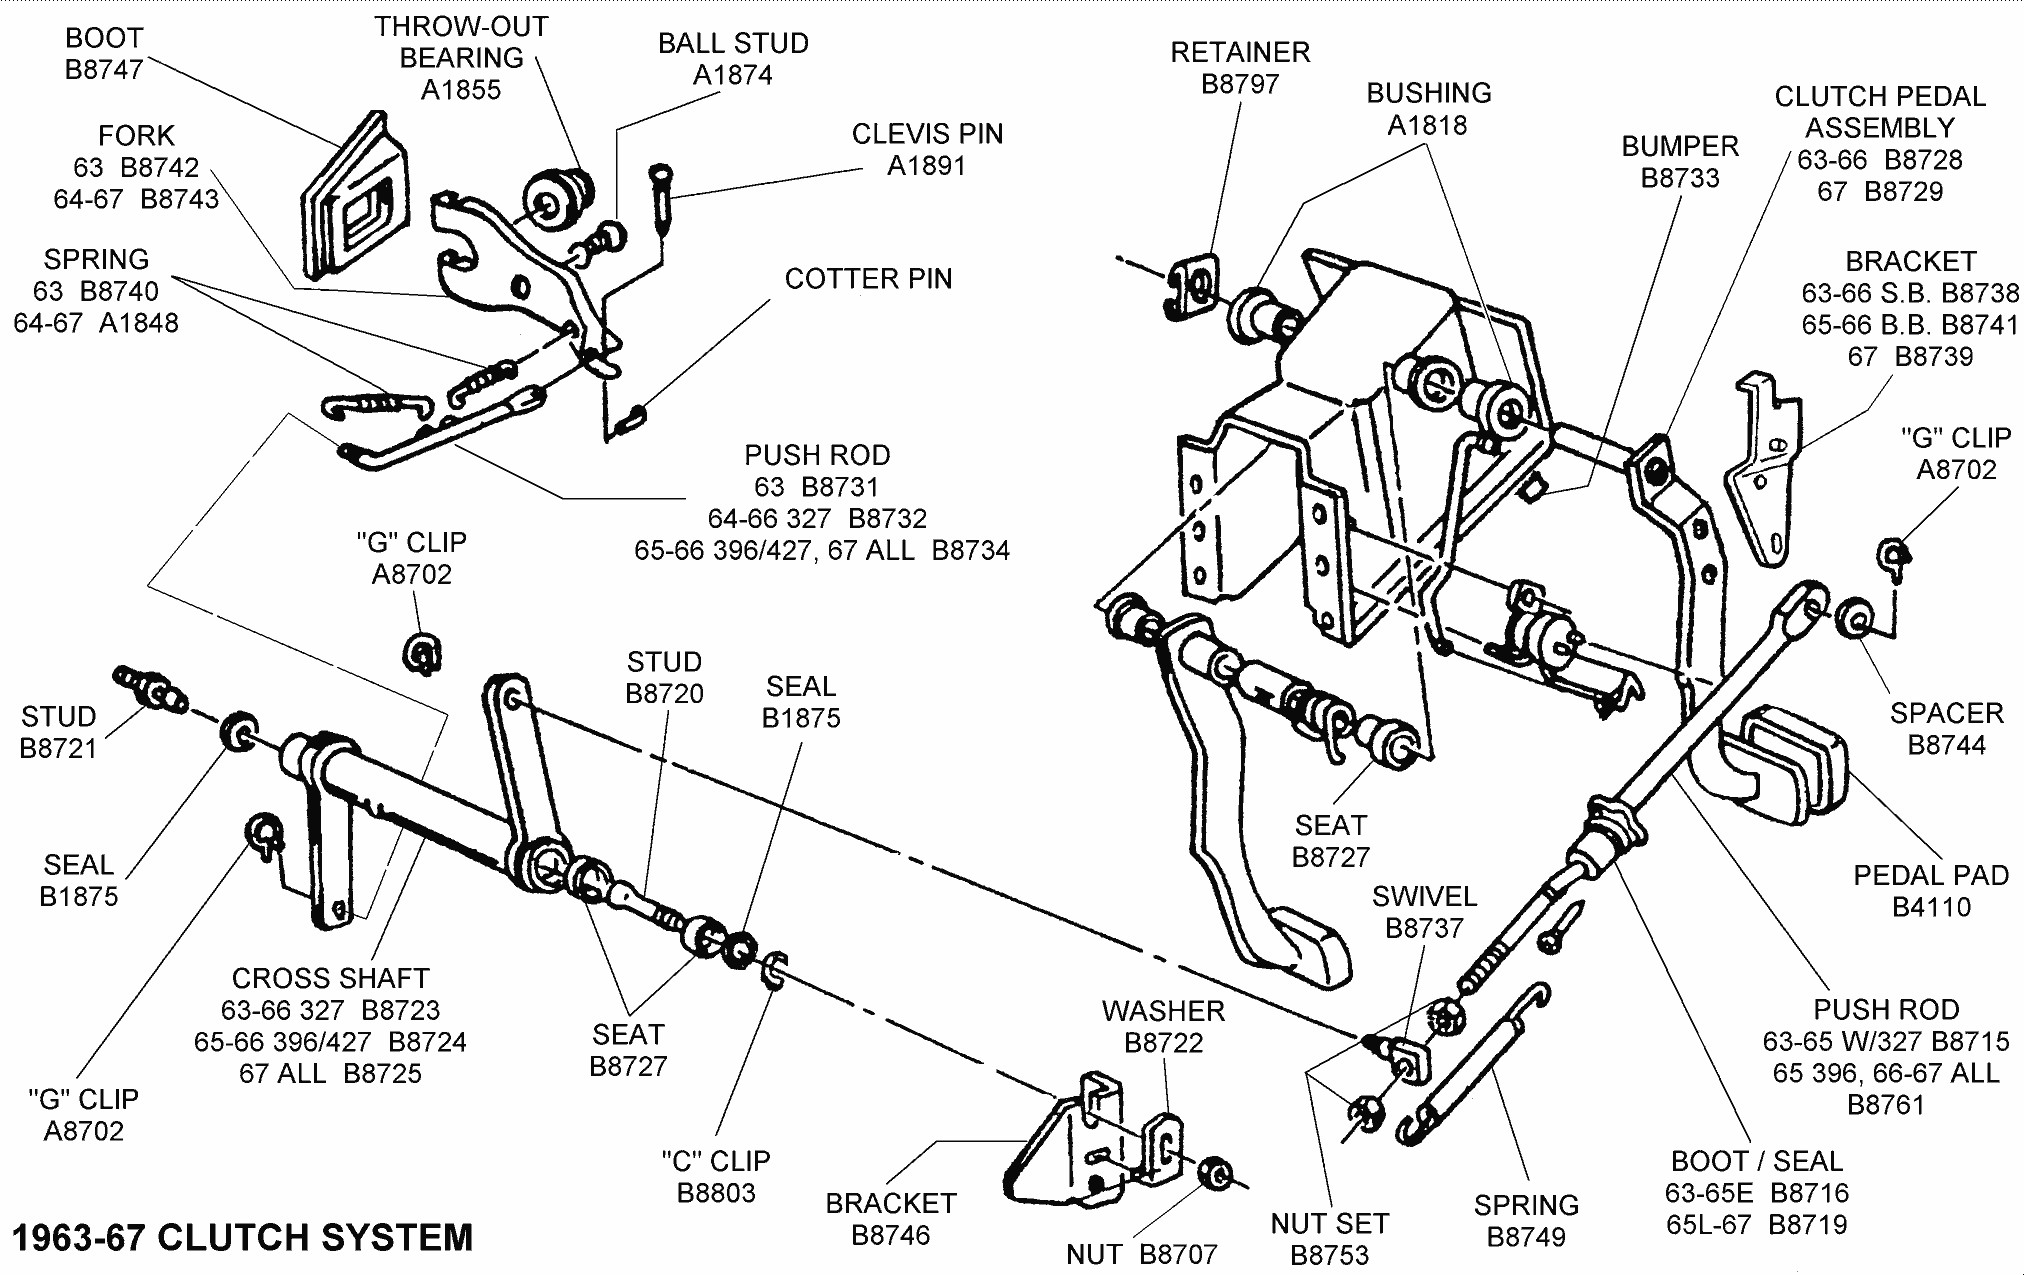 Clutch Parts Diagram 1964 Lincoln Continental Wiring Diagram 1964 Lincoln Continental Of Clutch Parts Diagram